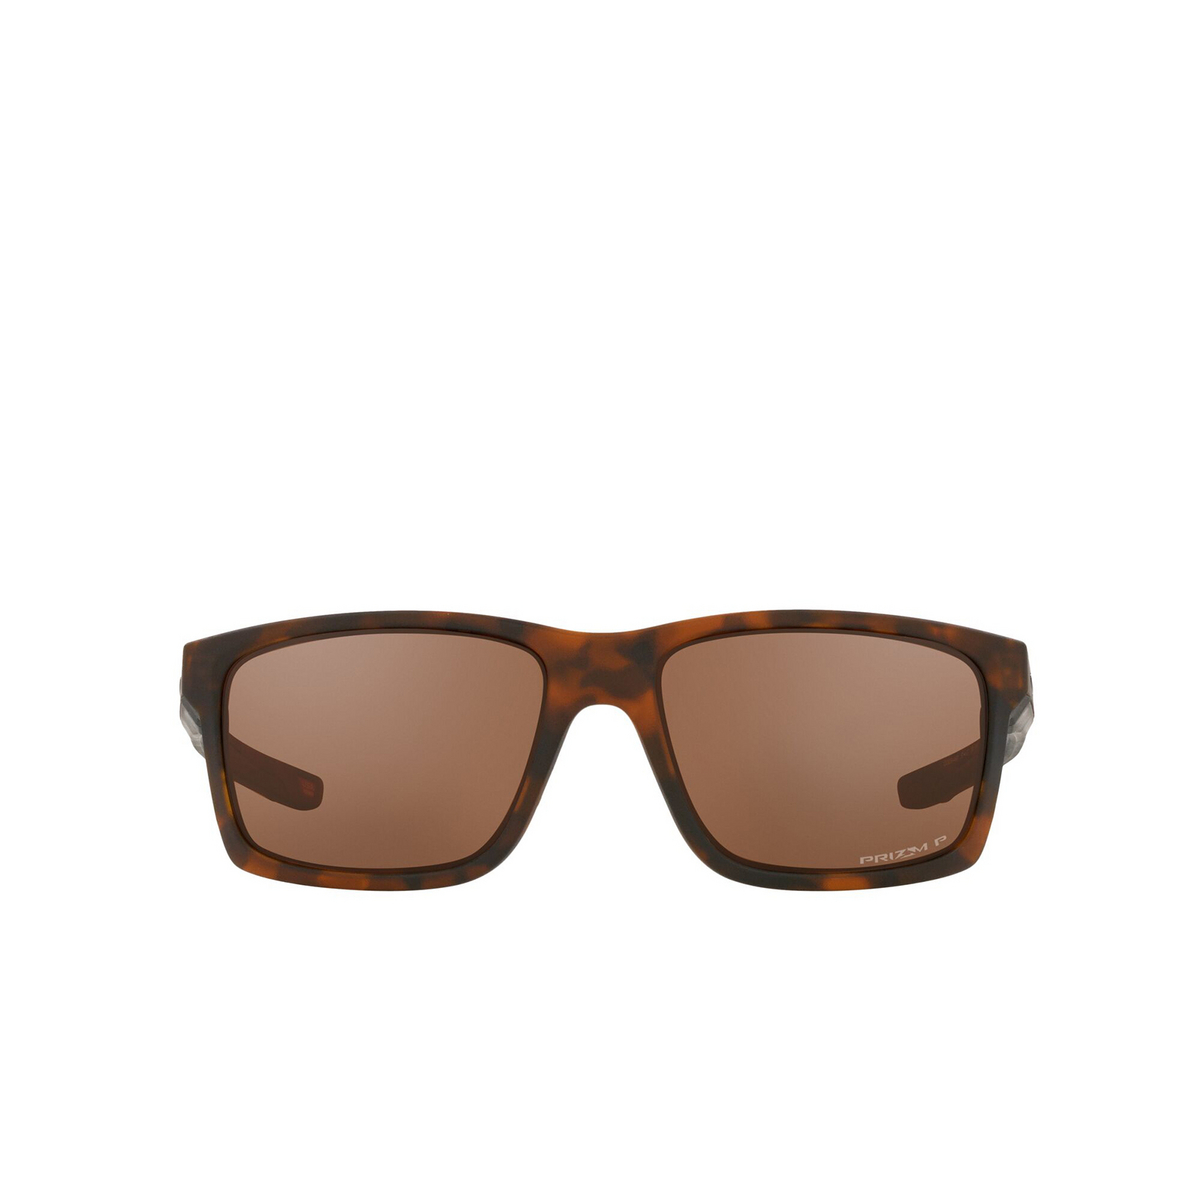 Oakley MAINLINK Sunglasses 926449 Matte Brown Tortoise - front view